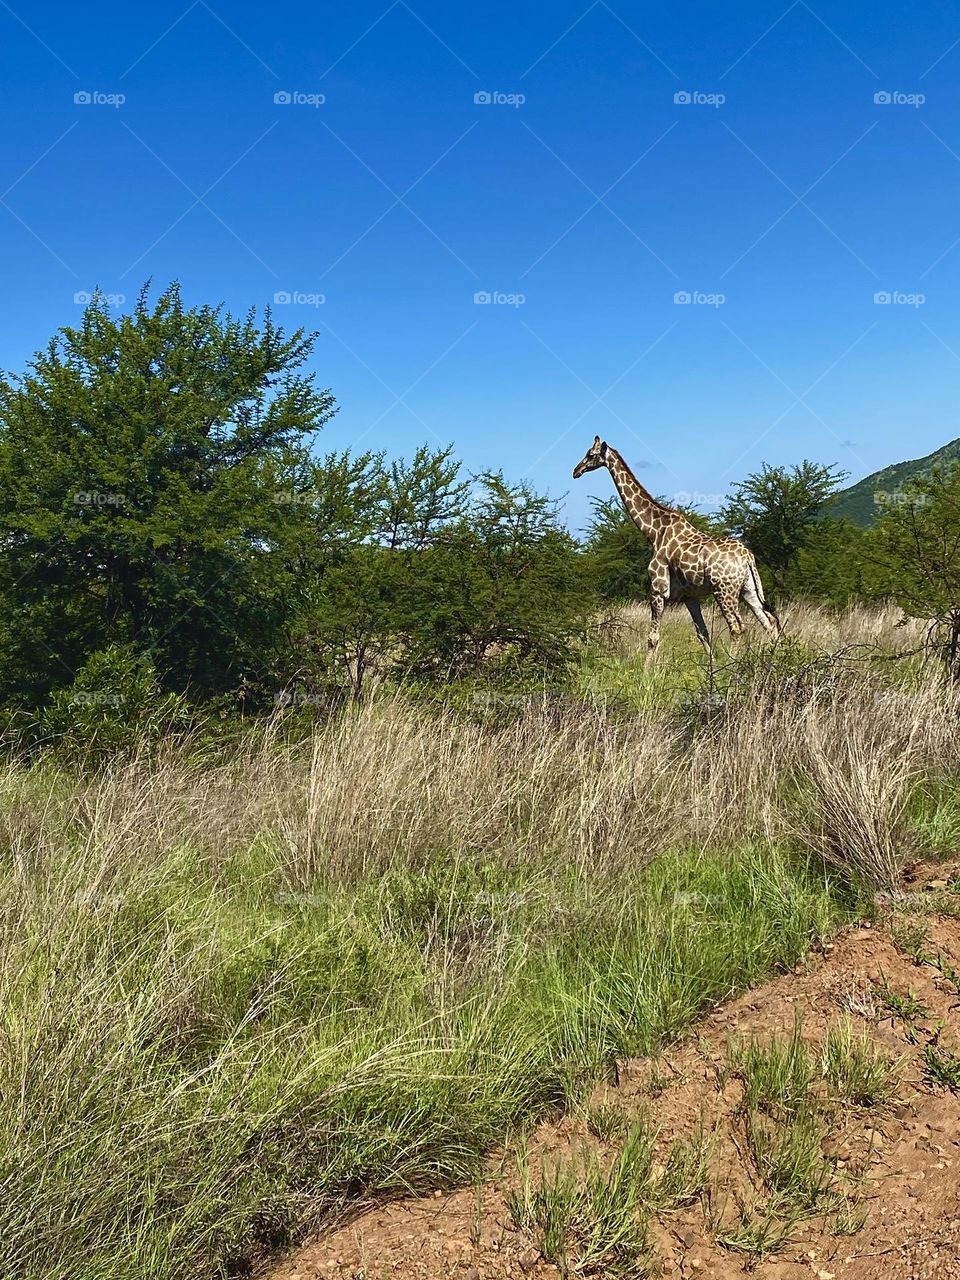 Giraffe grazing